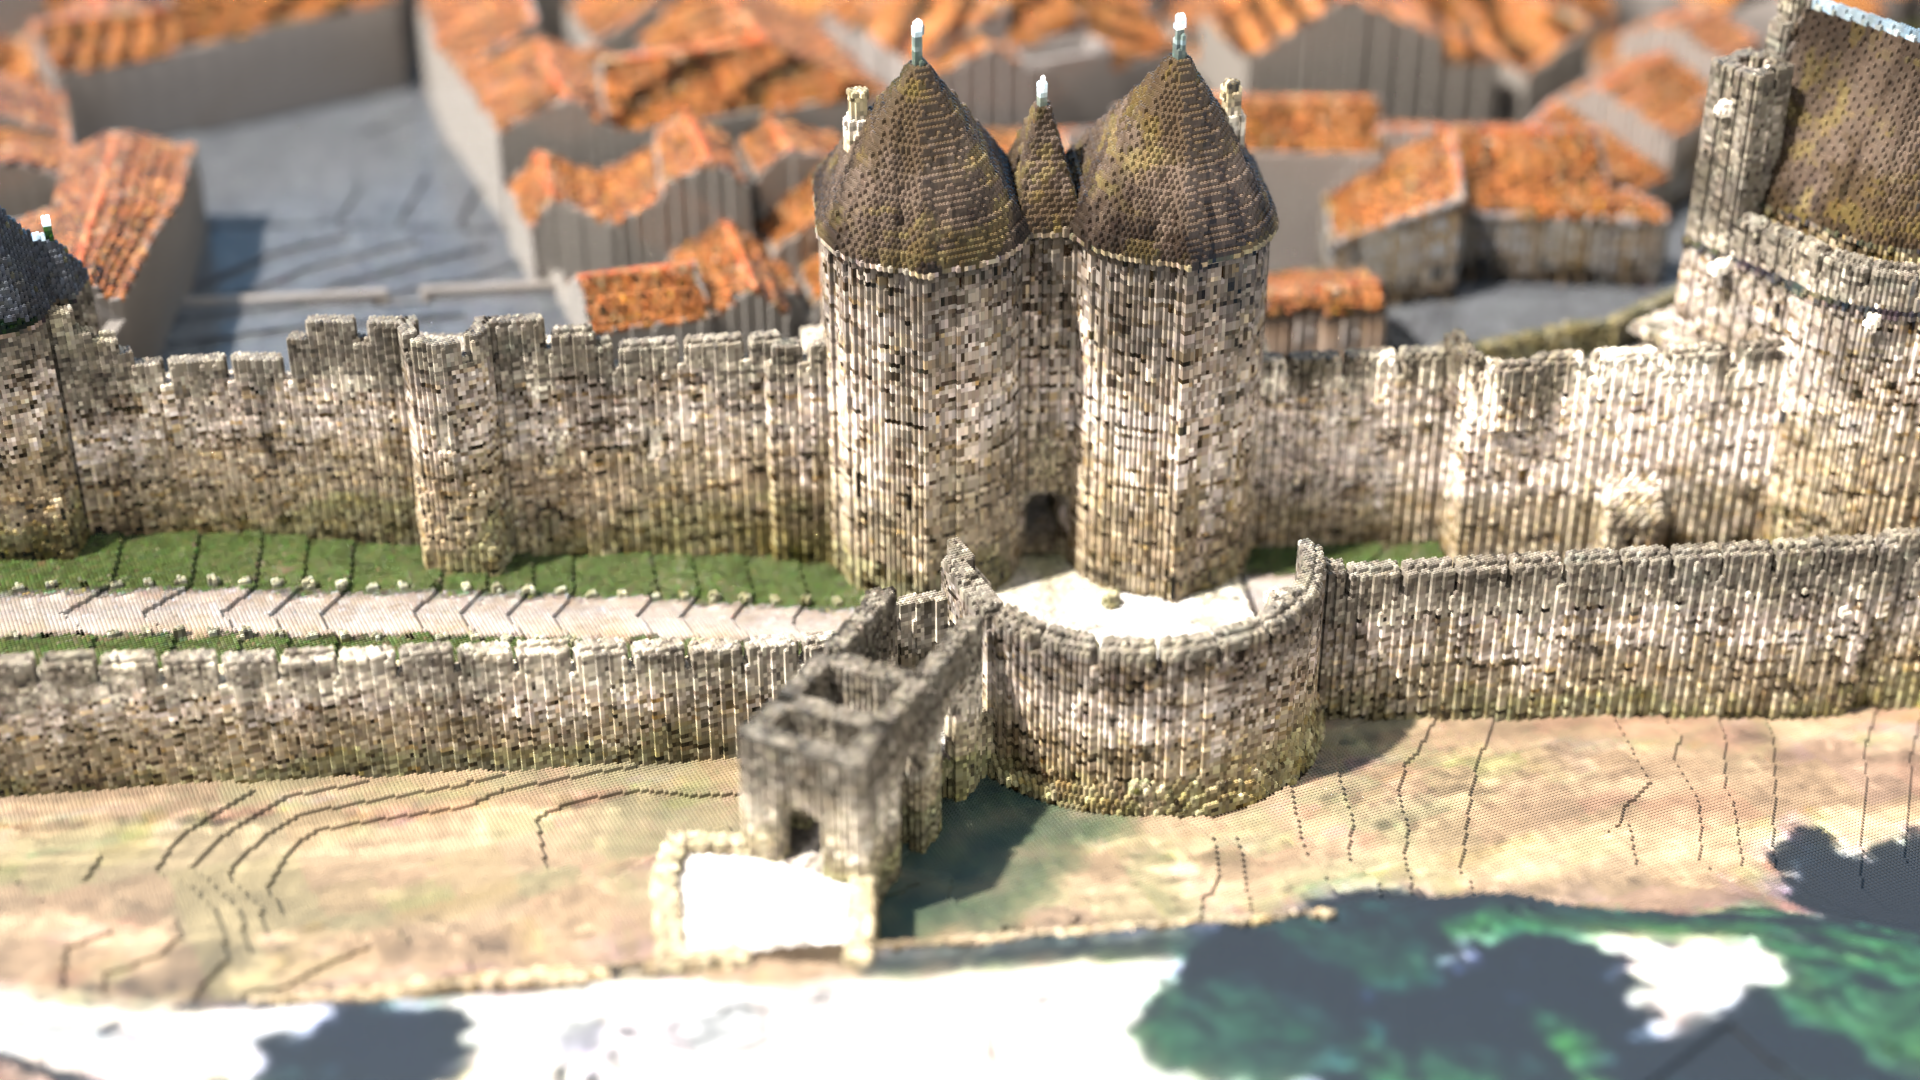 Lego medieval city - - Blender Artists Community